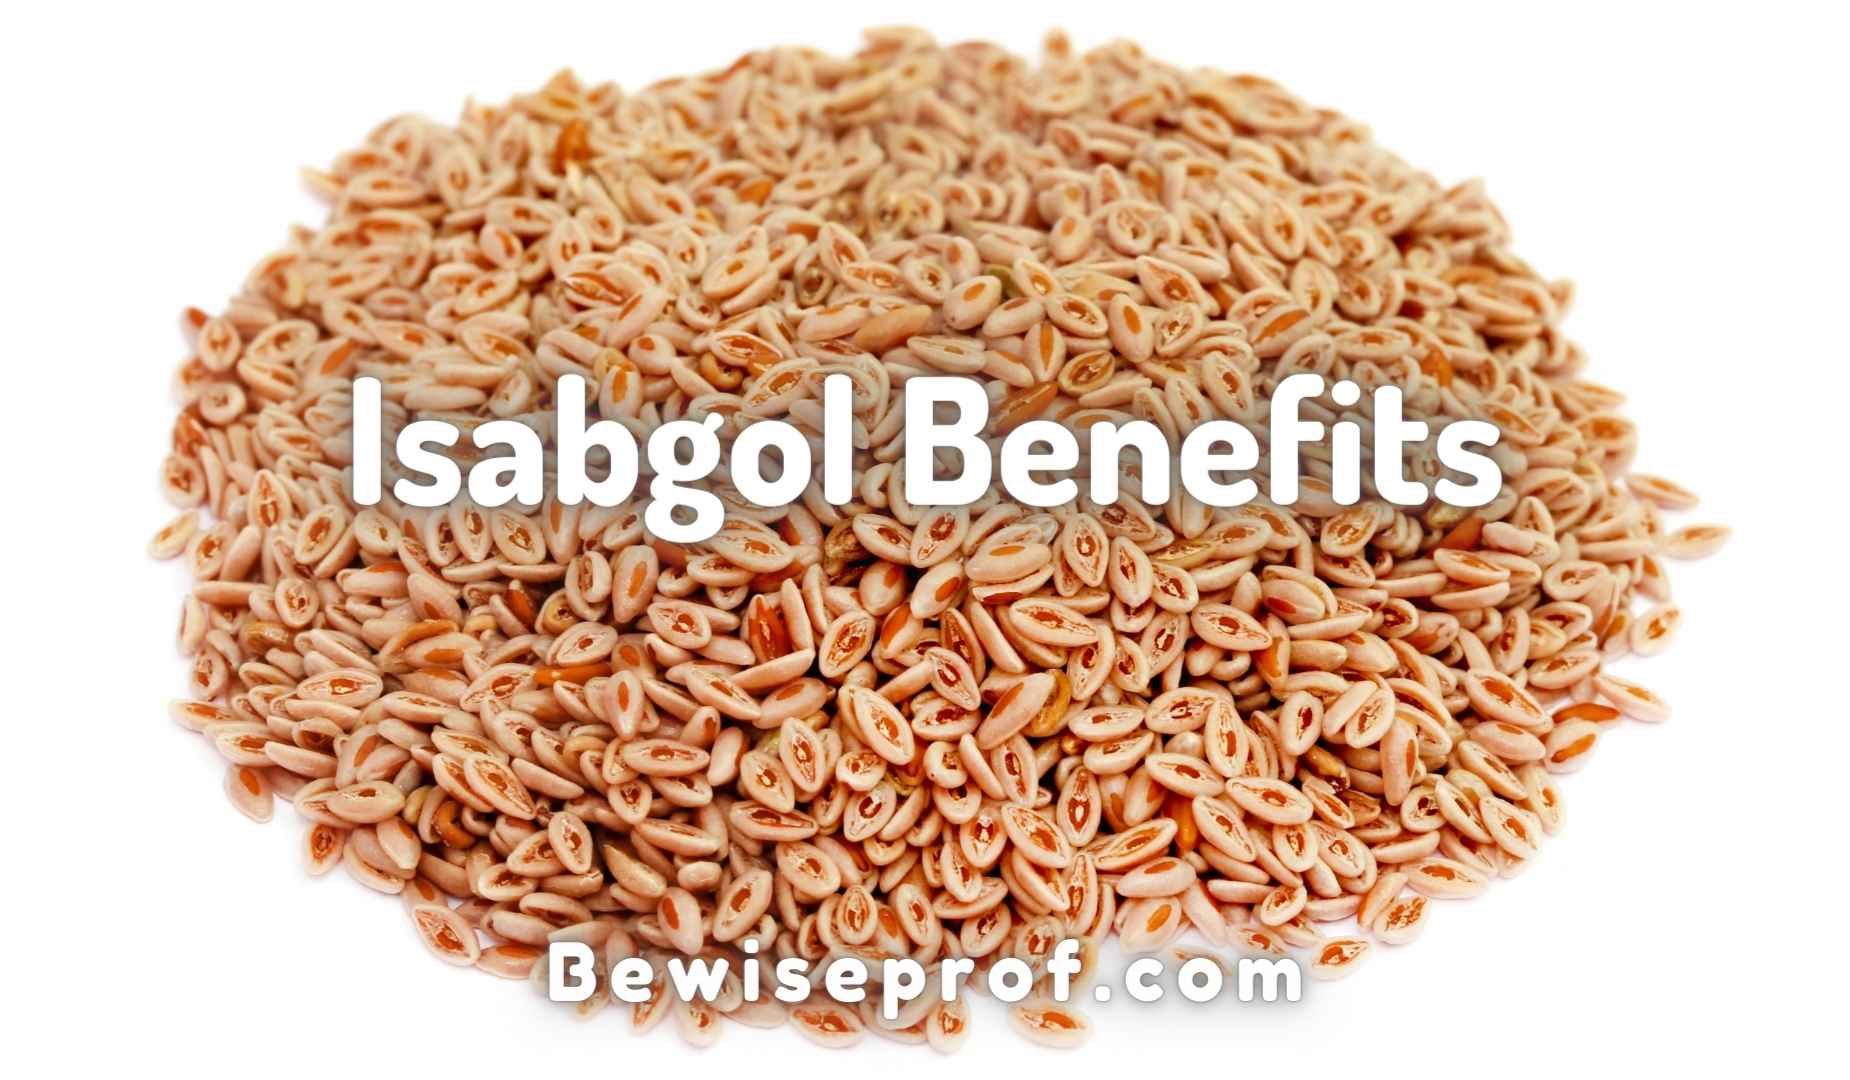 Isabgol Benefits